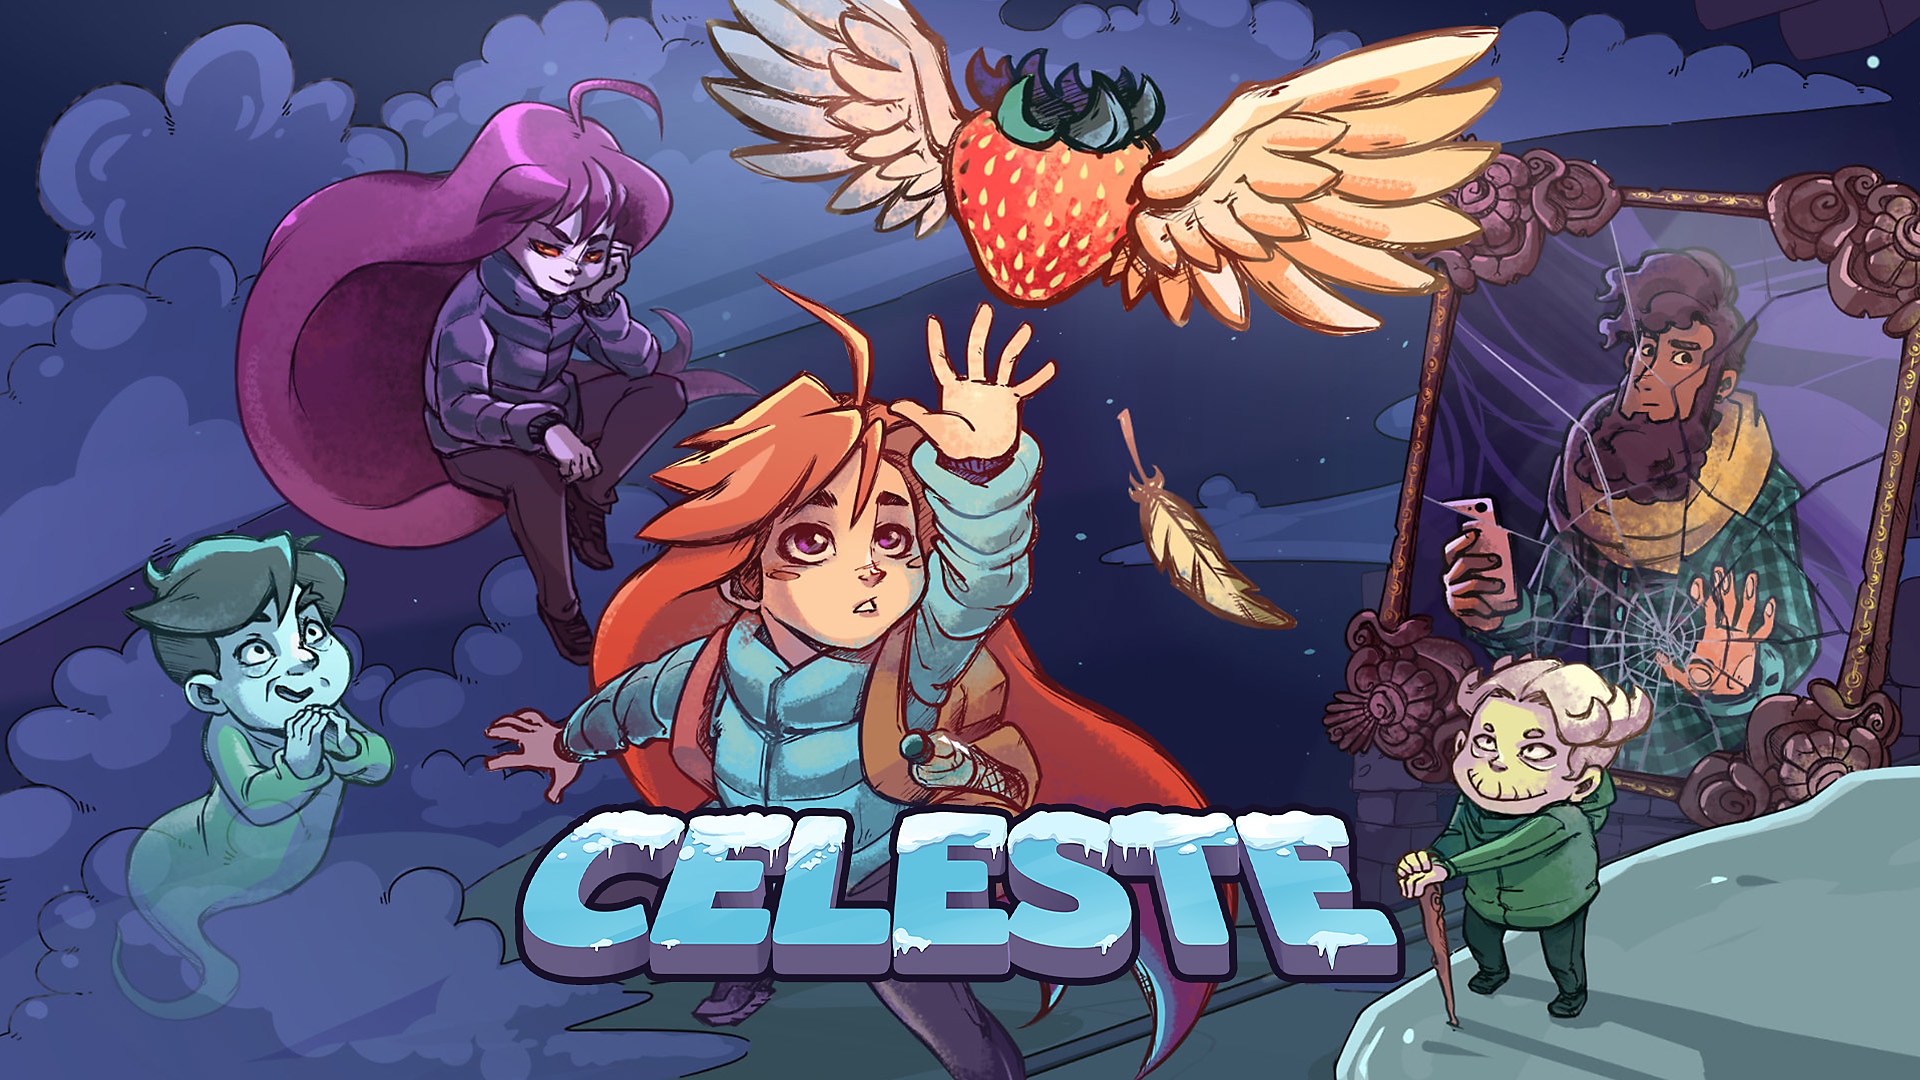 Celeste - Launch Trailer | PS4